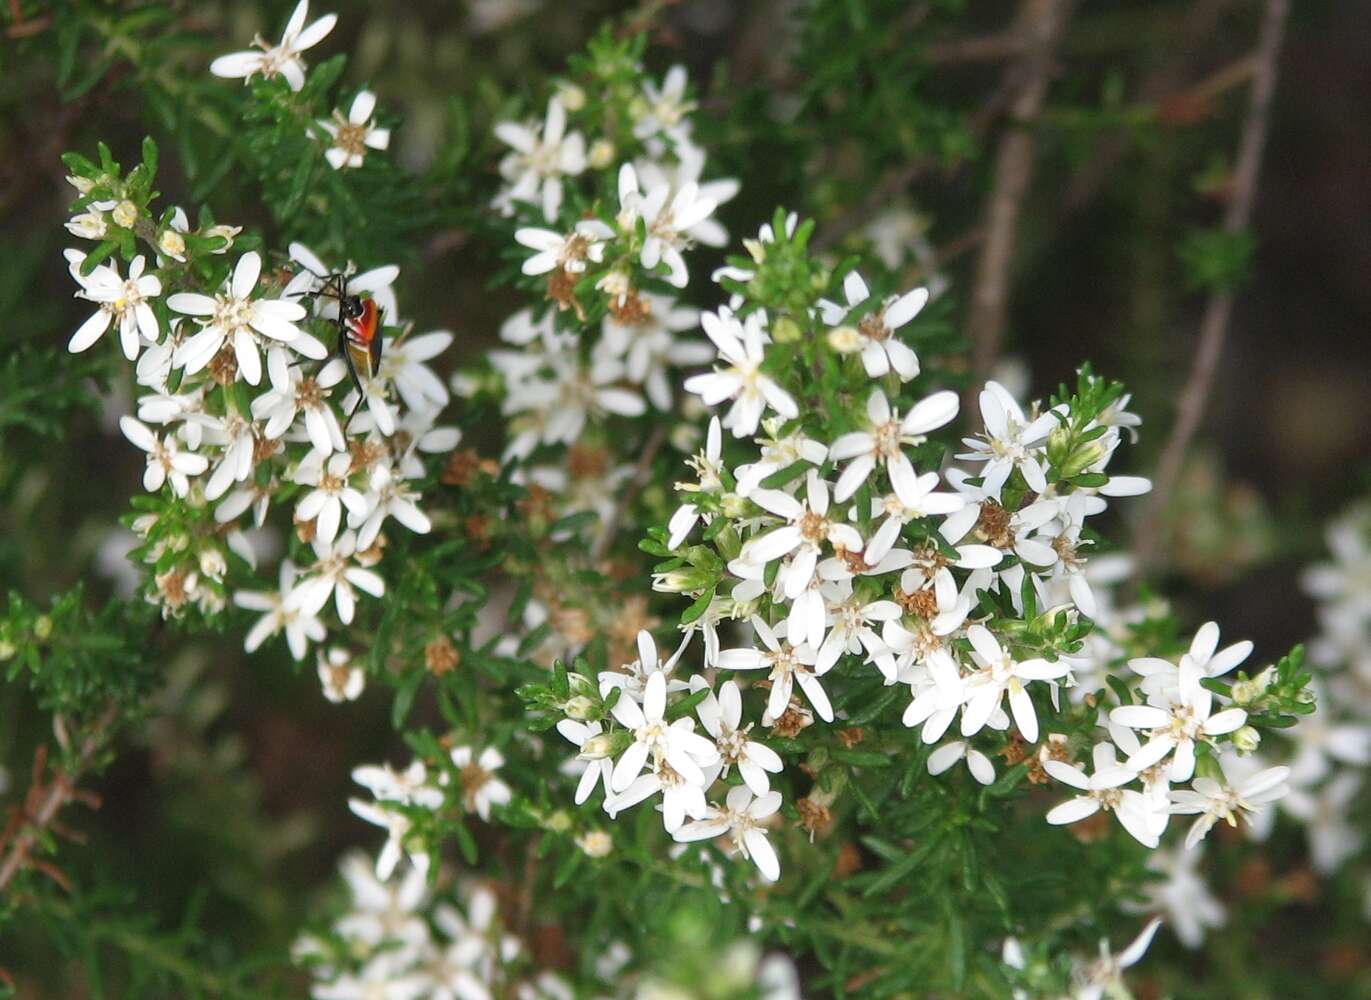 Image of Twiggy Daisy-bush